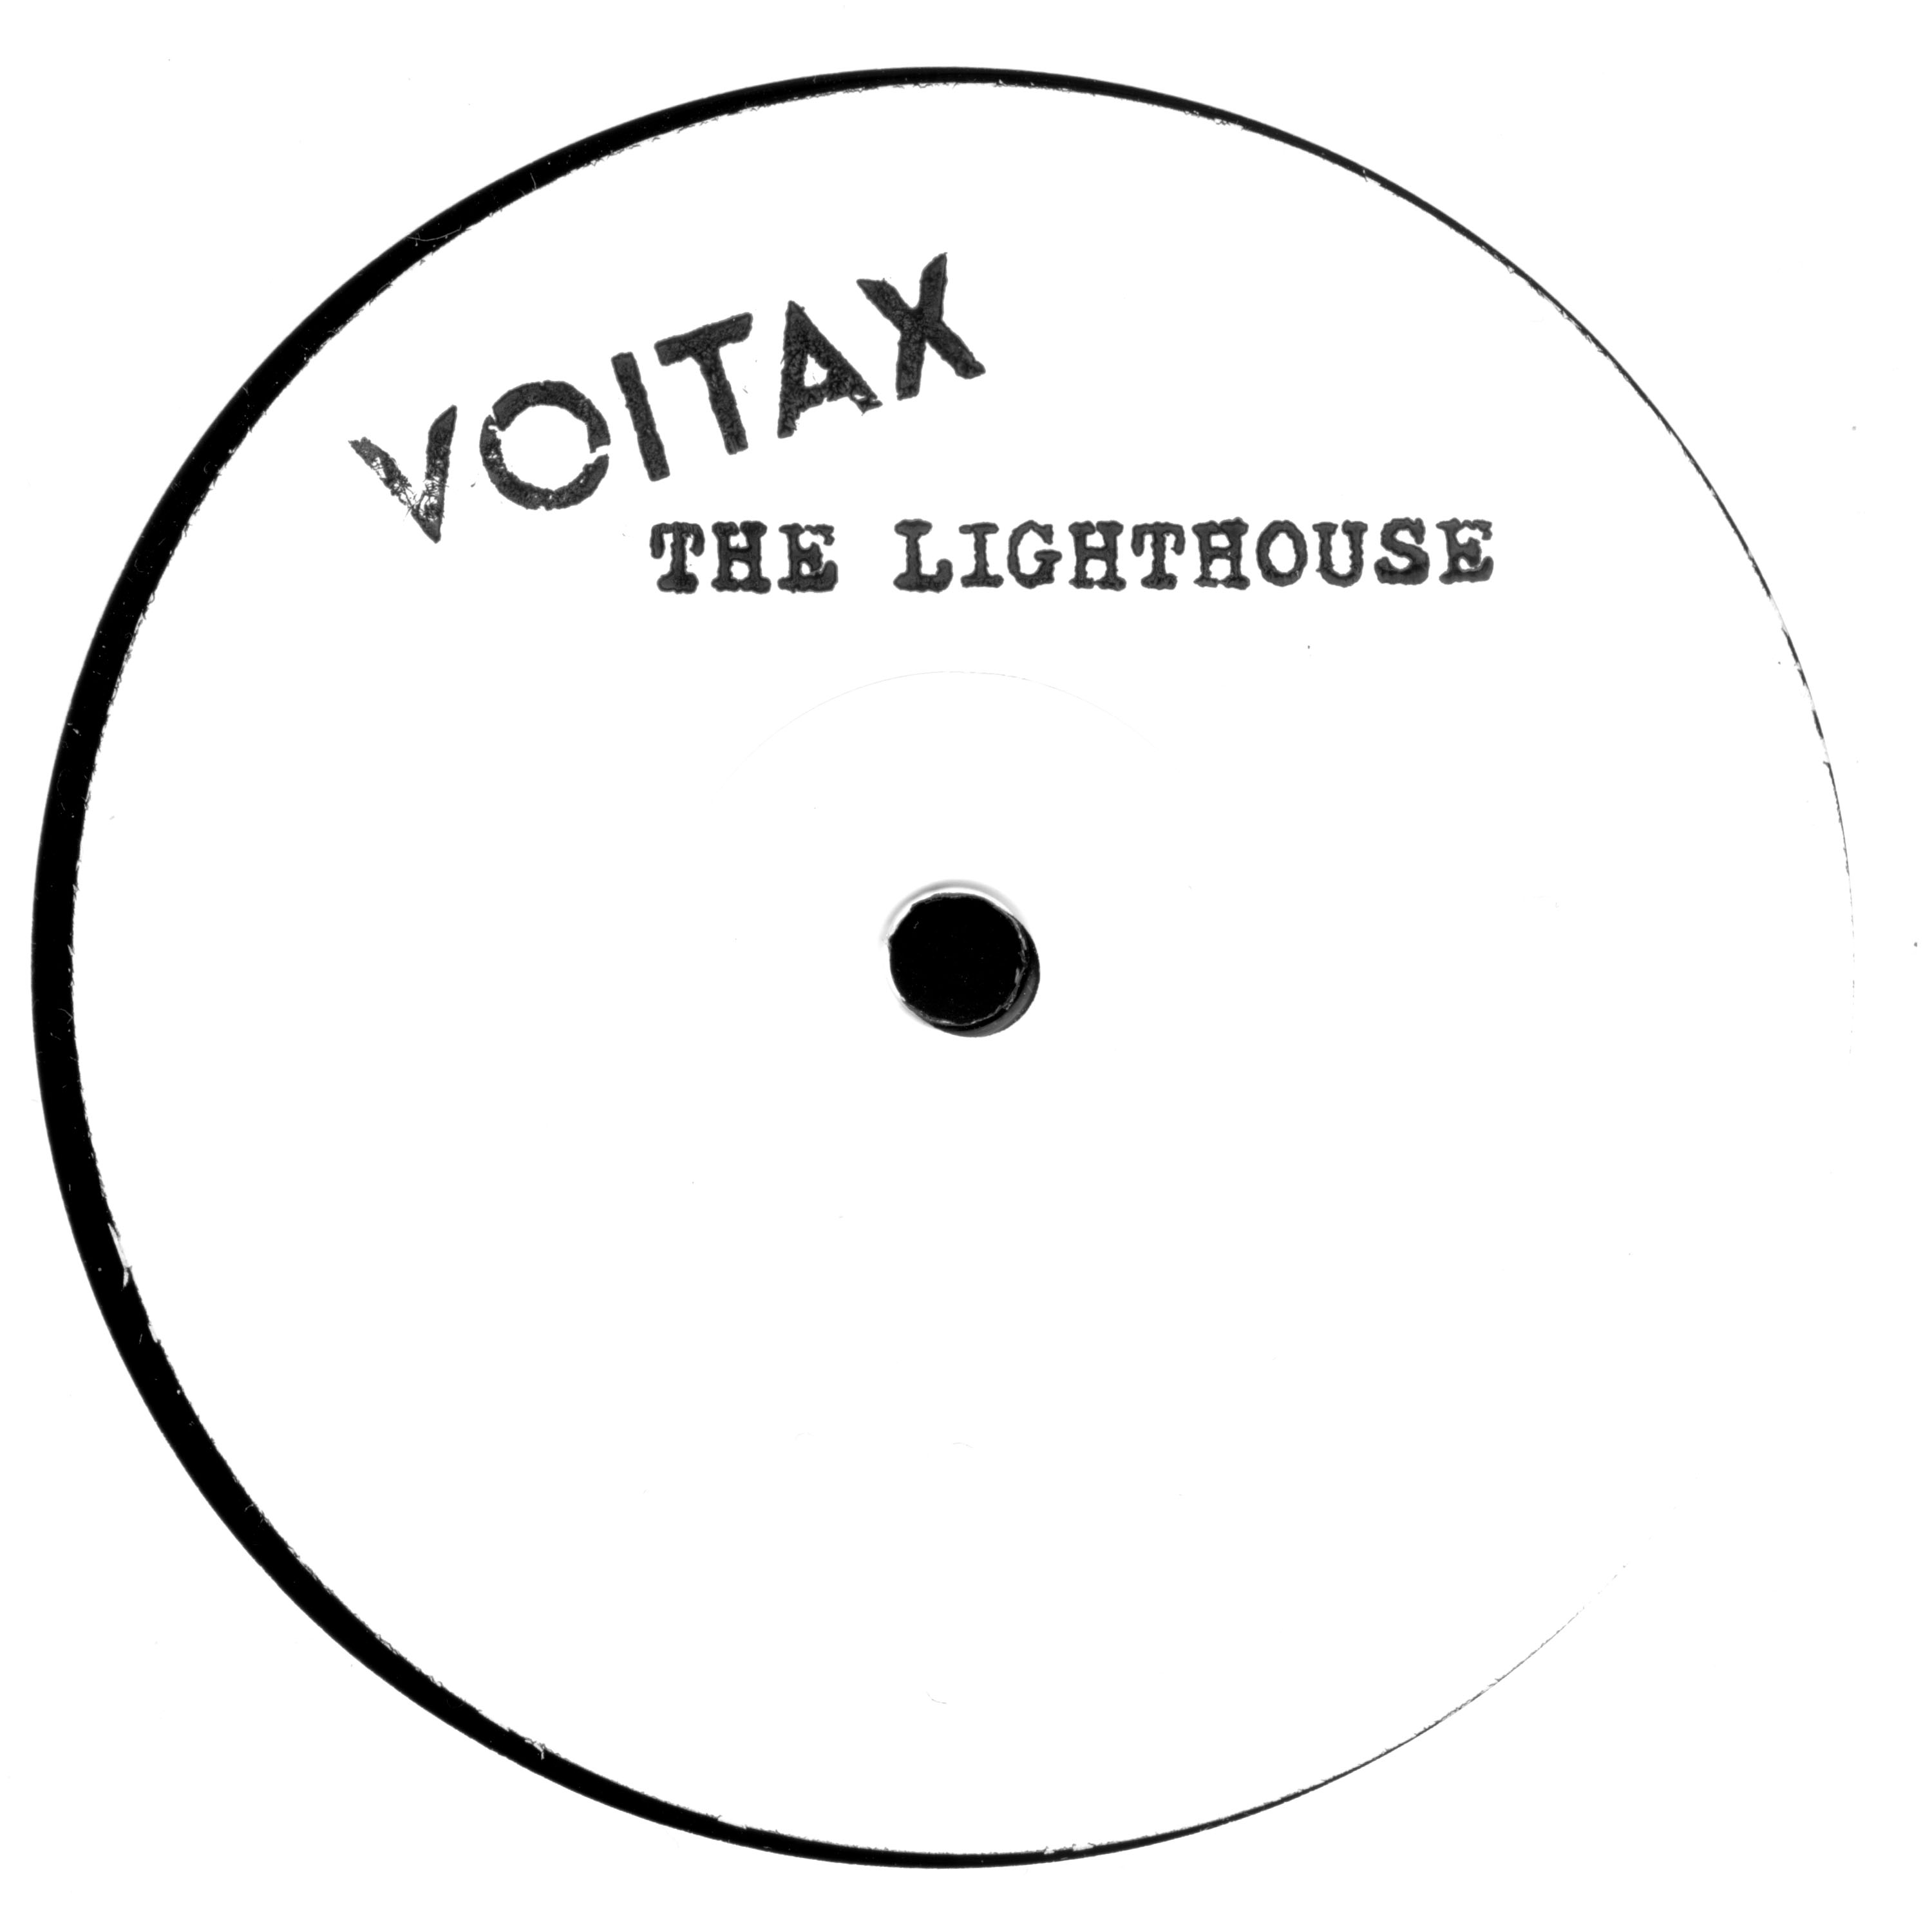 VOITAX Swarm Intelligence – The Lighthouse